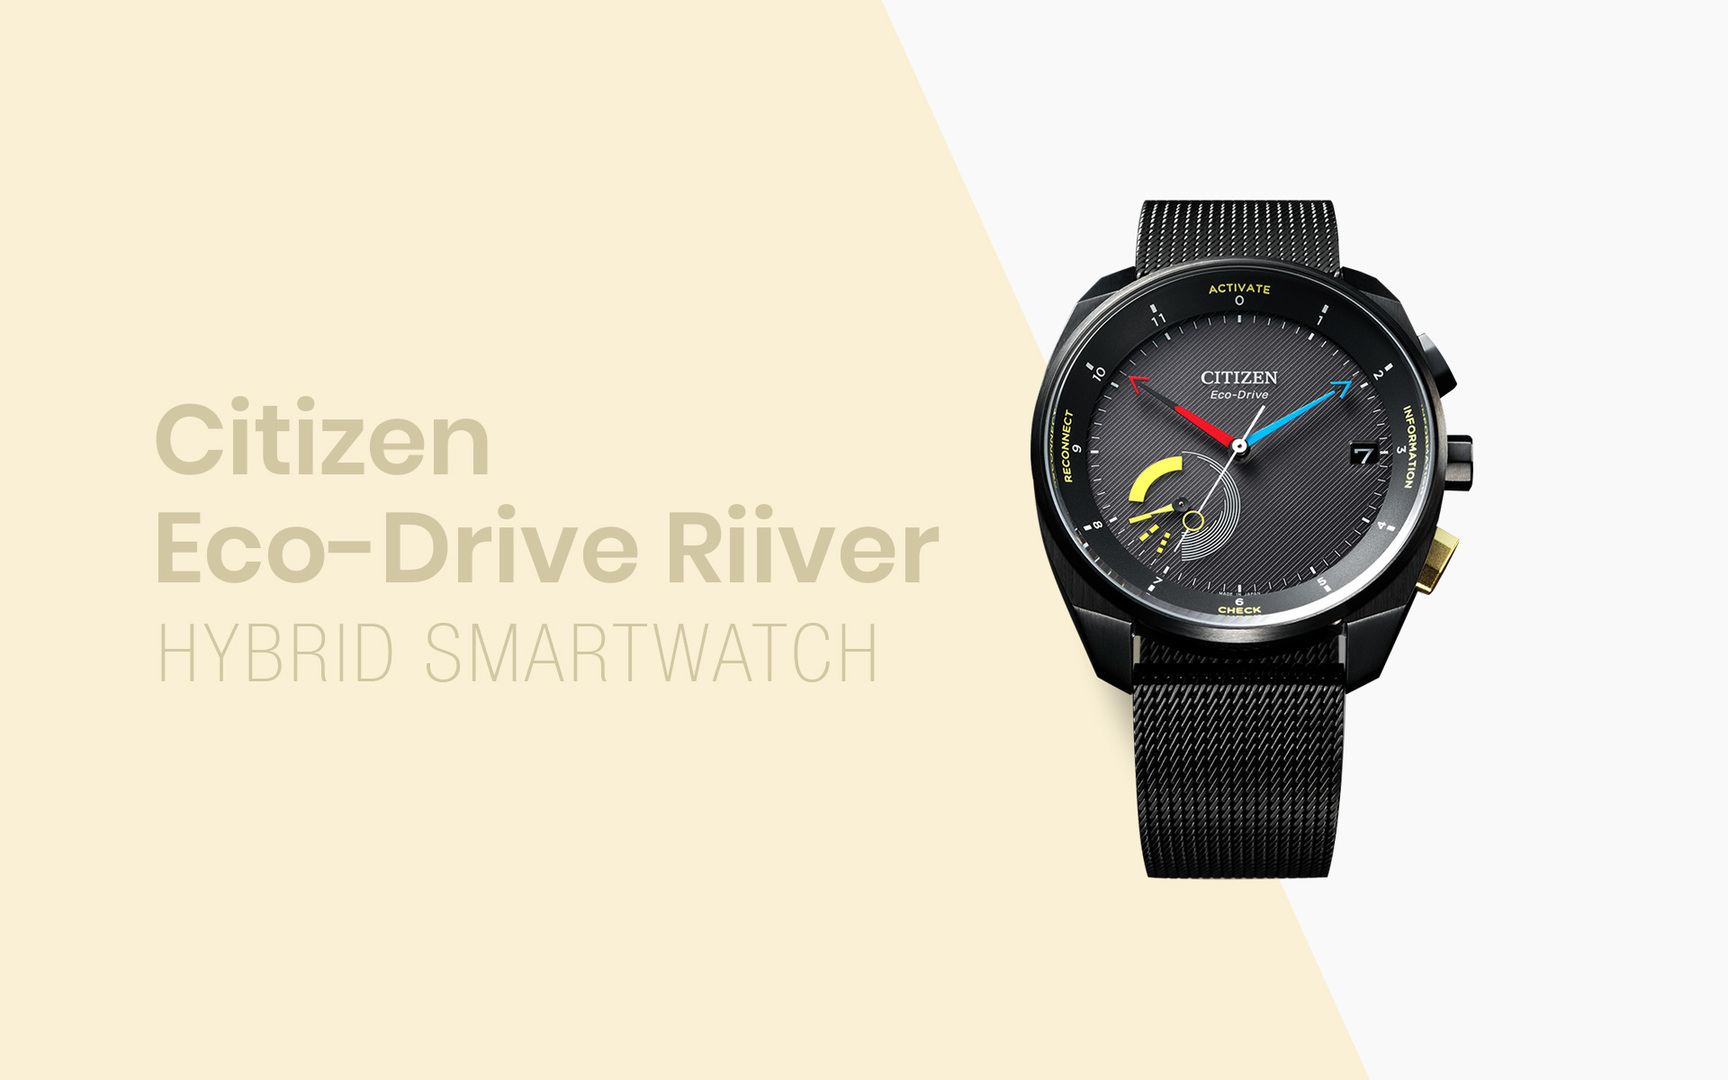 The Citizen Eco-Drive Riiiver is a smarter hybrid smartwatch